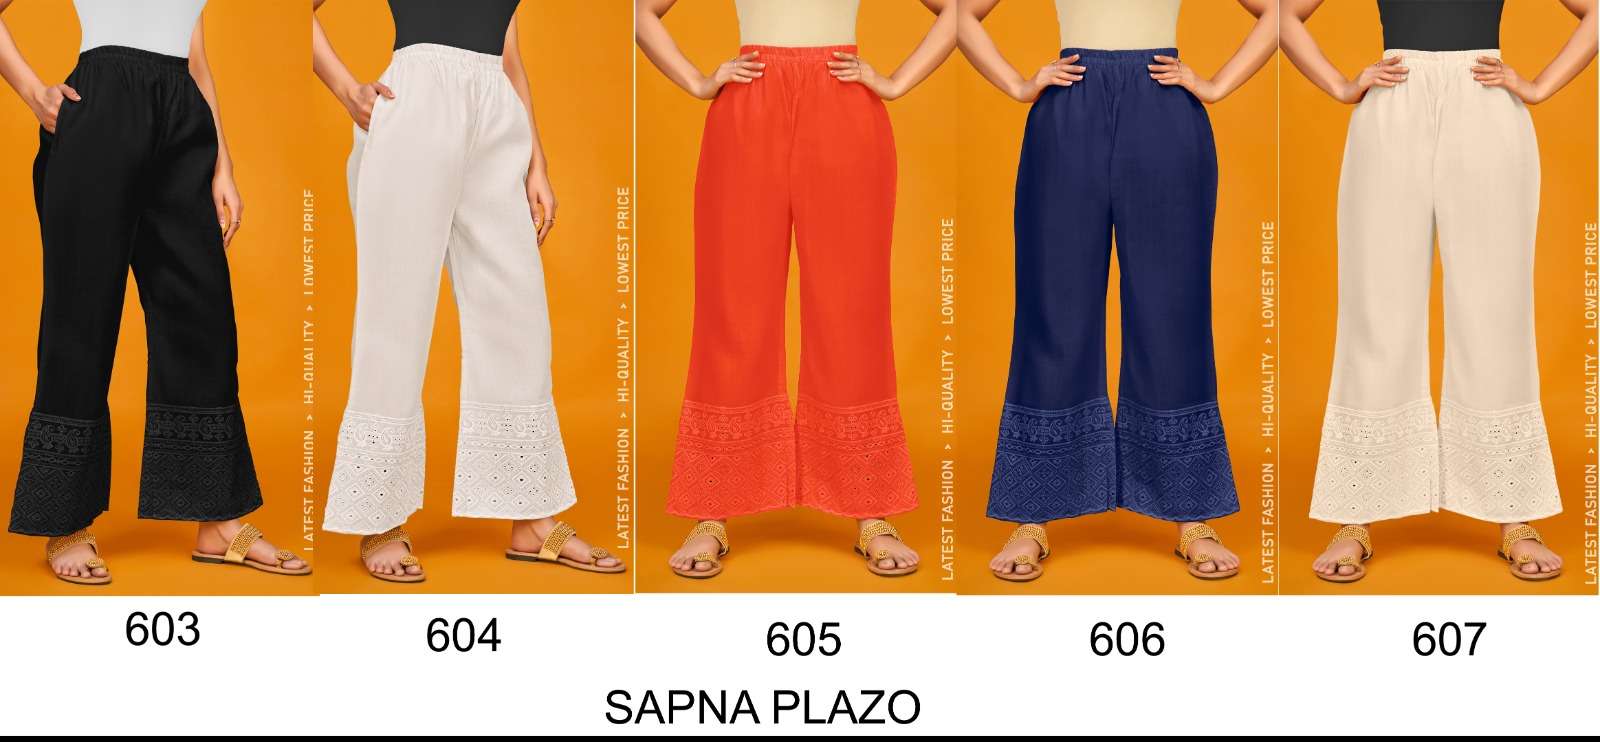 Sapna Plazo 603 Series By Tunic House 603 To 607 Series Stylish Fancy Beautiful Colorful Casual Wear & Ethnic Wear Cotton Palazzo At Wholesale Price